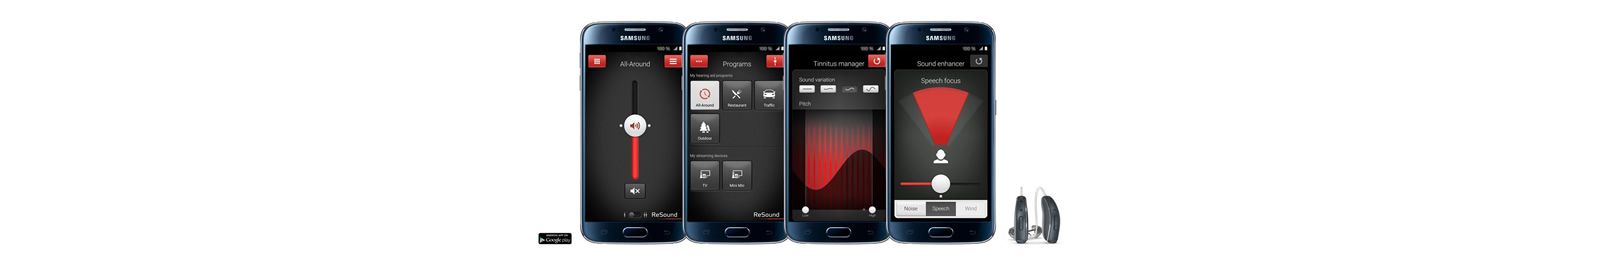 linx2-RS_Samsung_Galaxy_S6_Smart_app-3_Line-Up